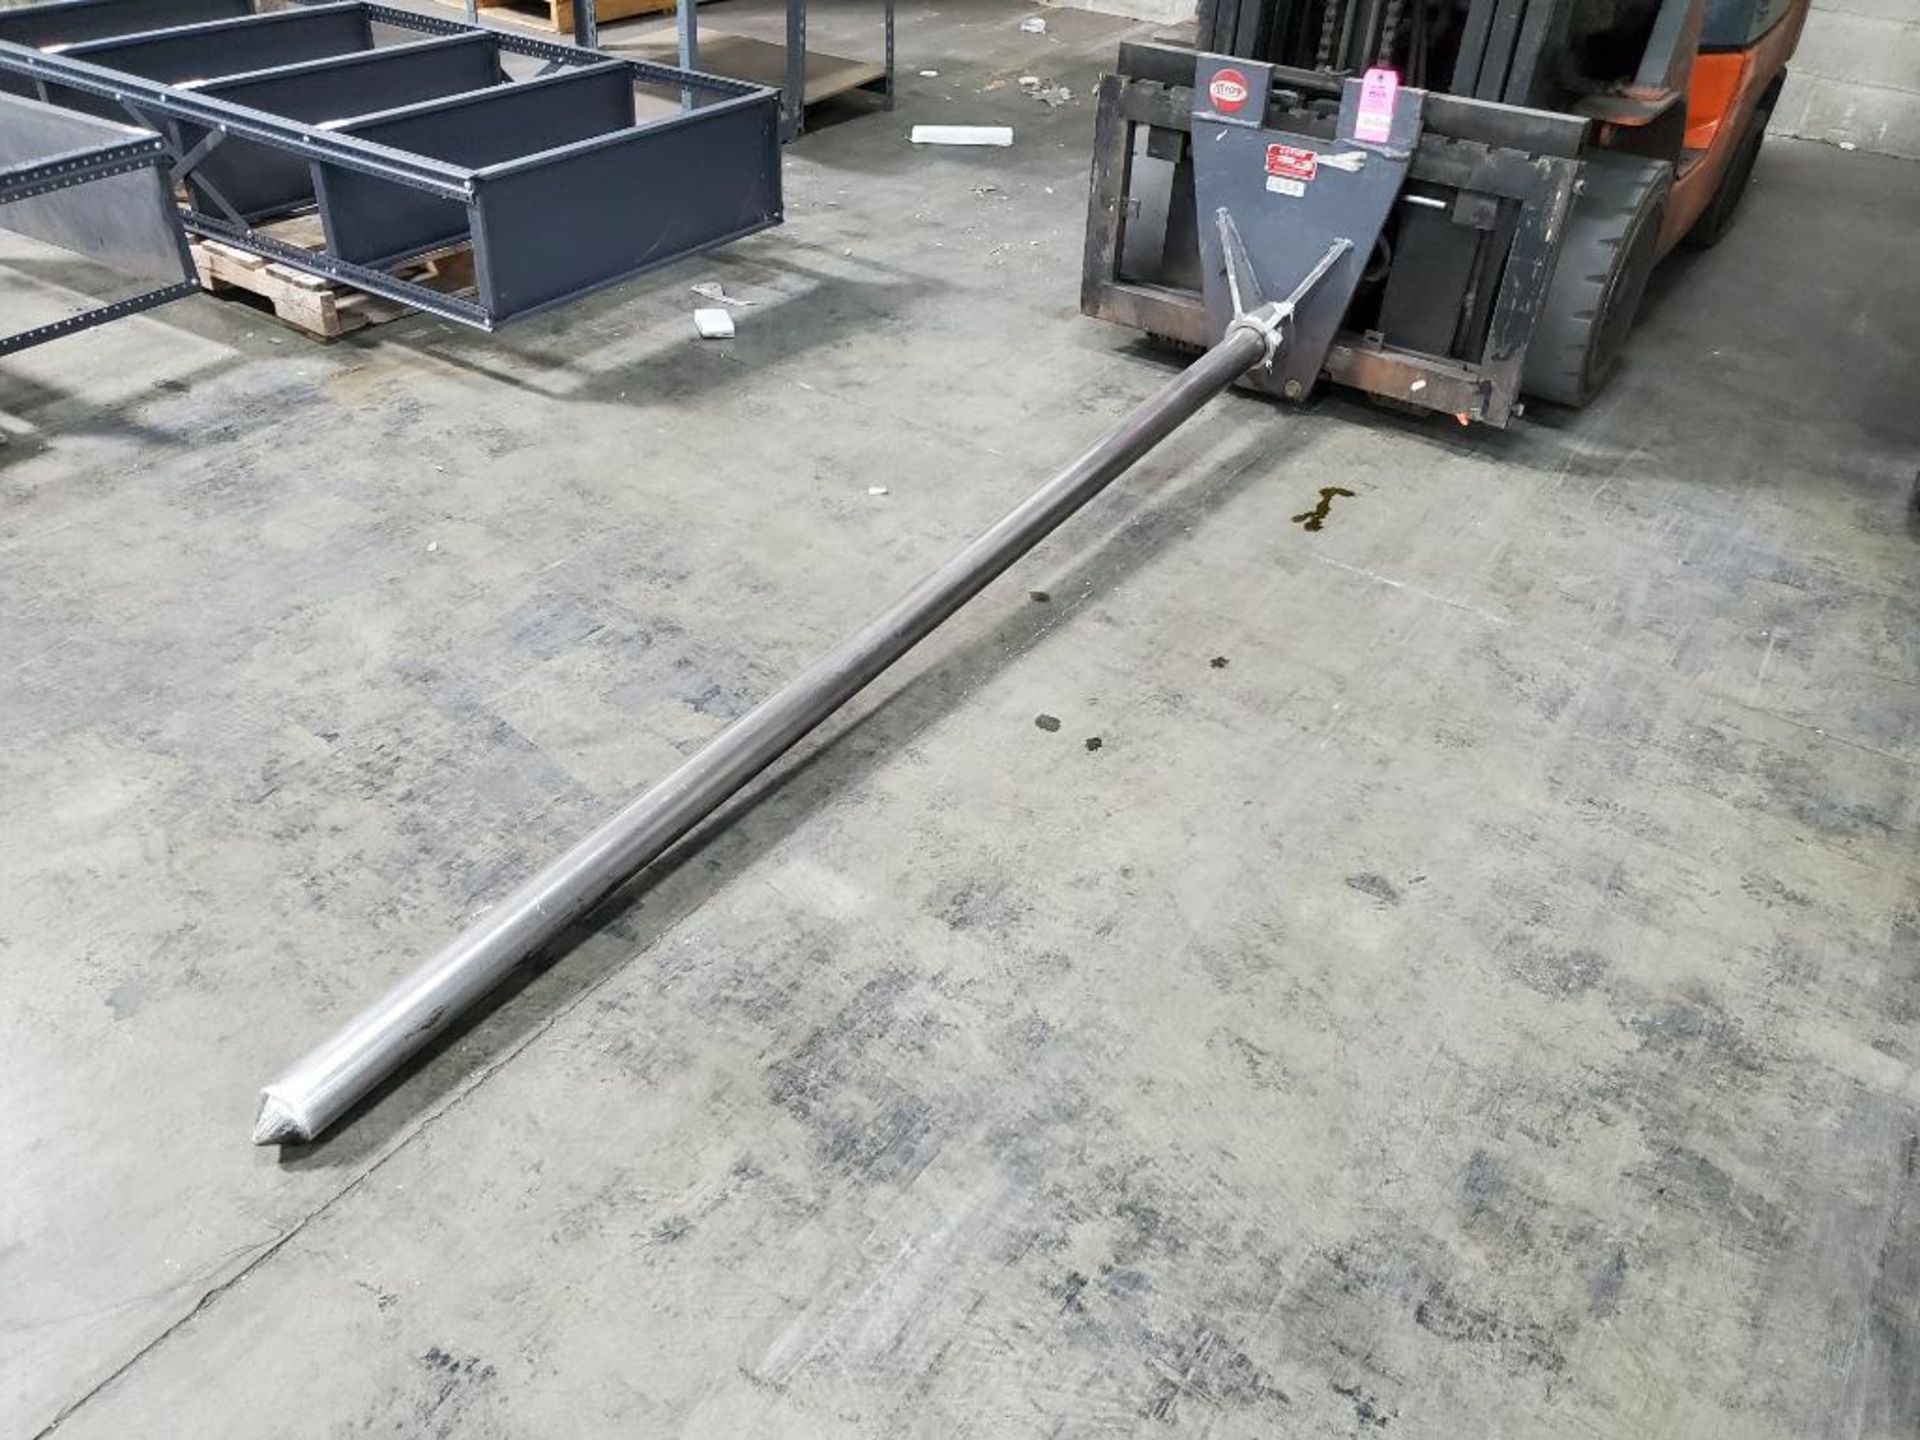 8ft Arrow carpet / roll lifting fork lift attachment. 3in diameter.